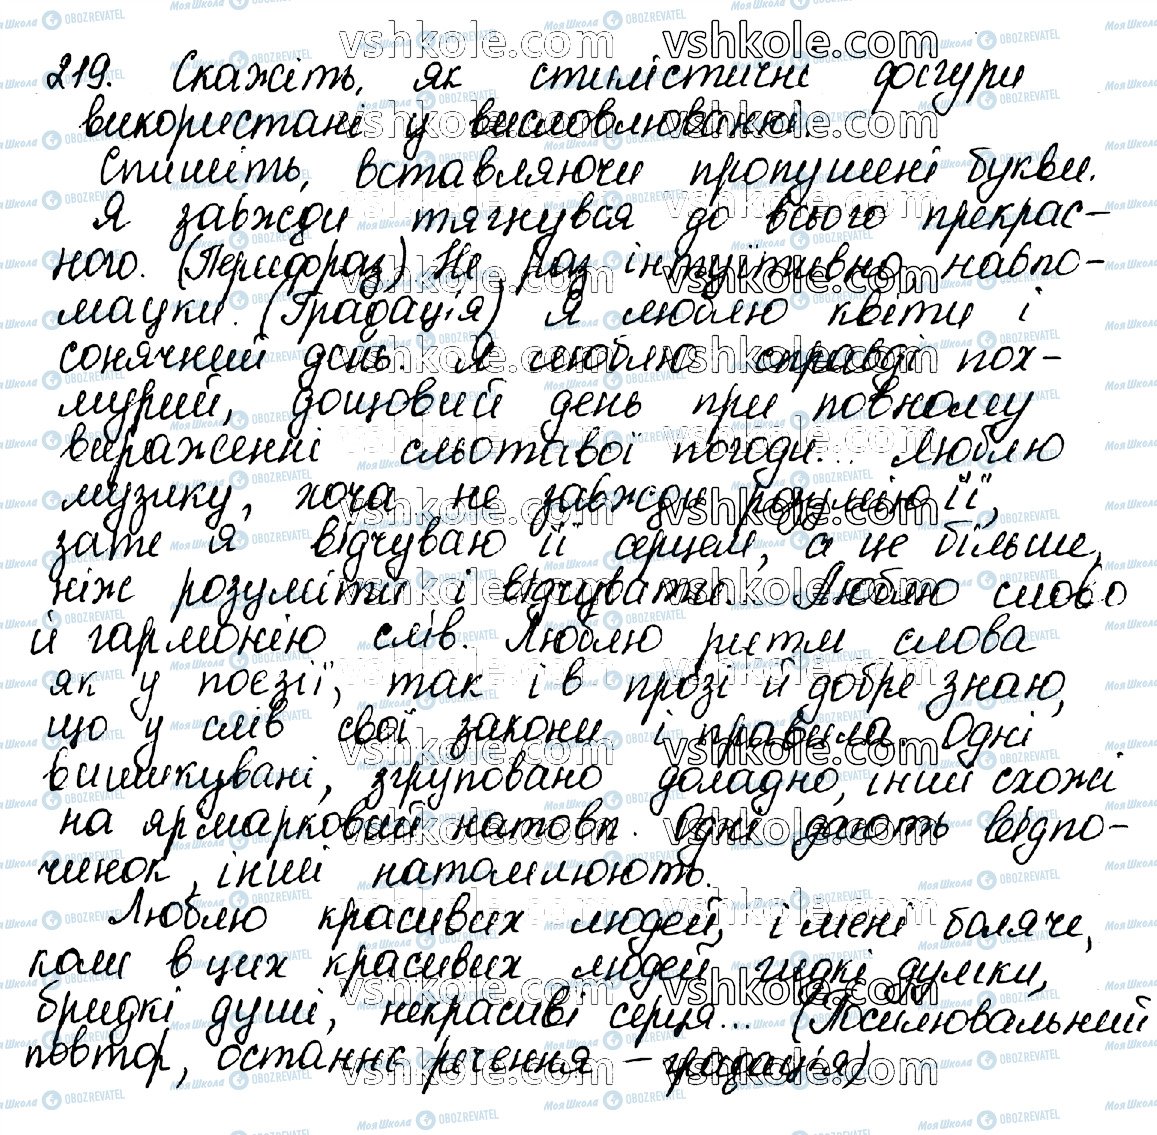 ГДЗ Укр мова 10 класс страница 219